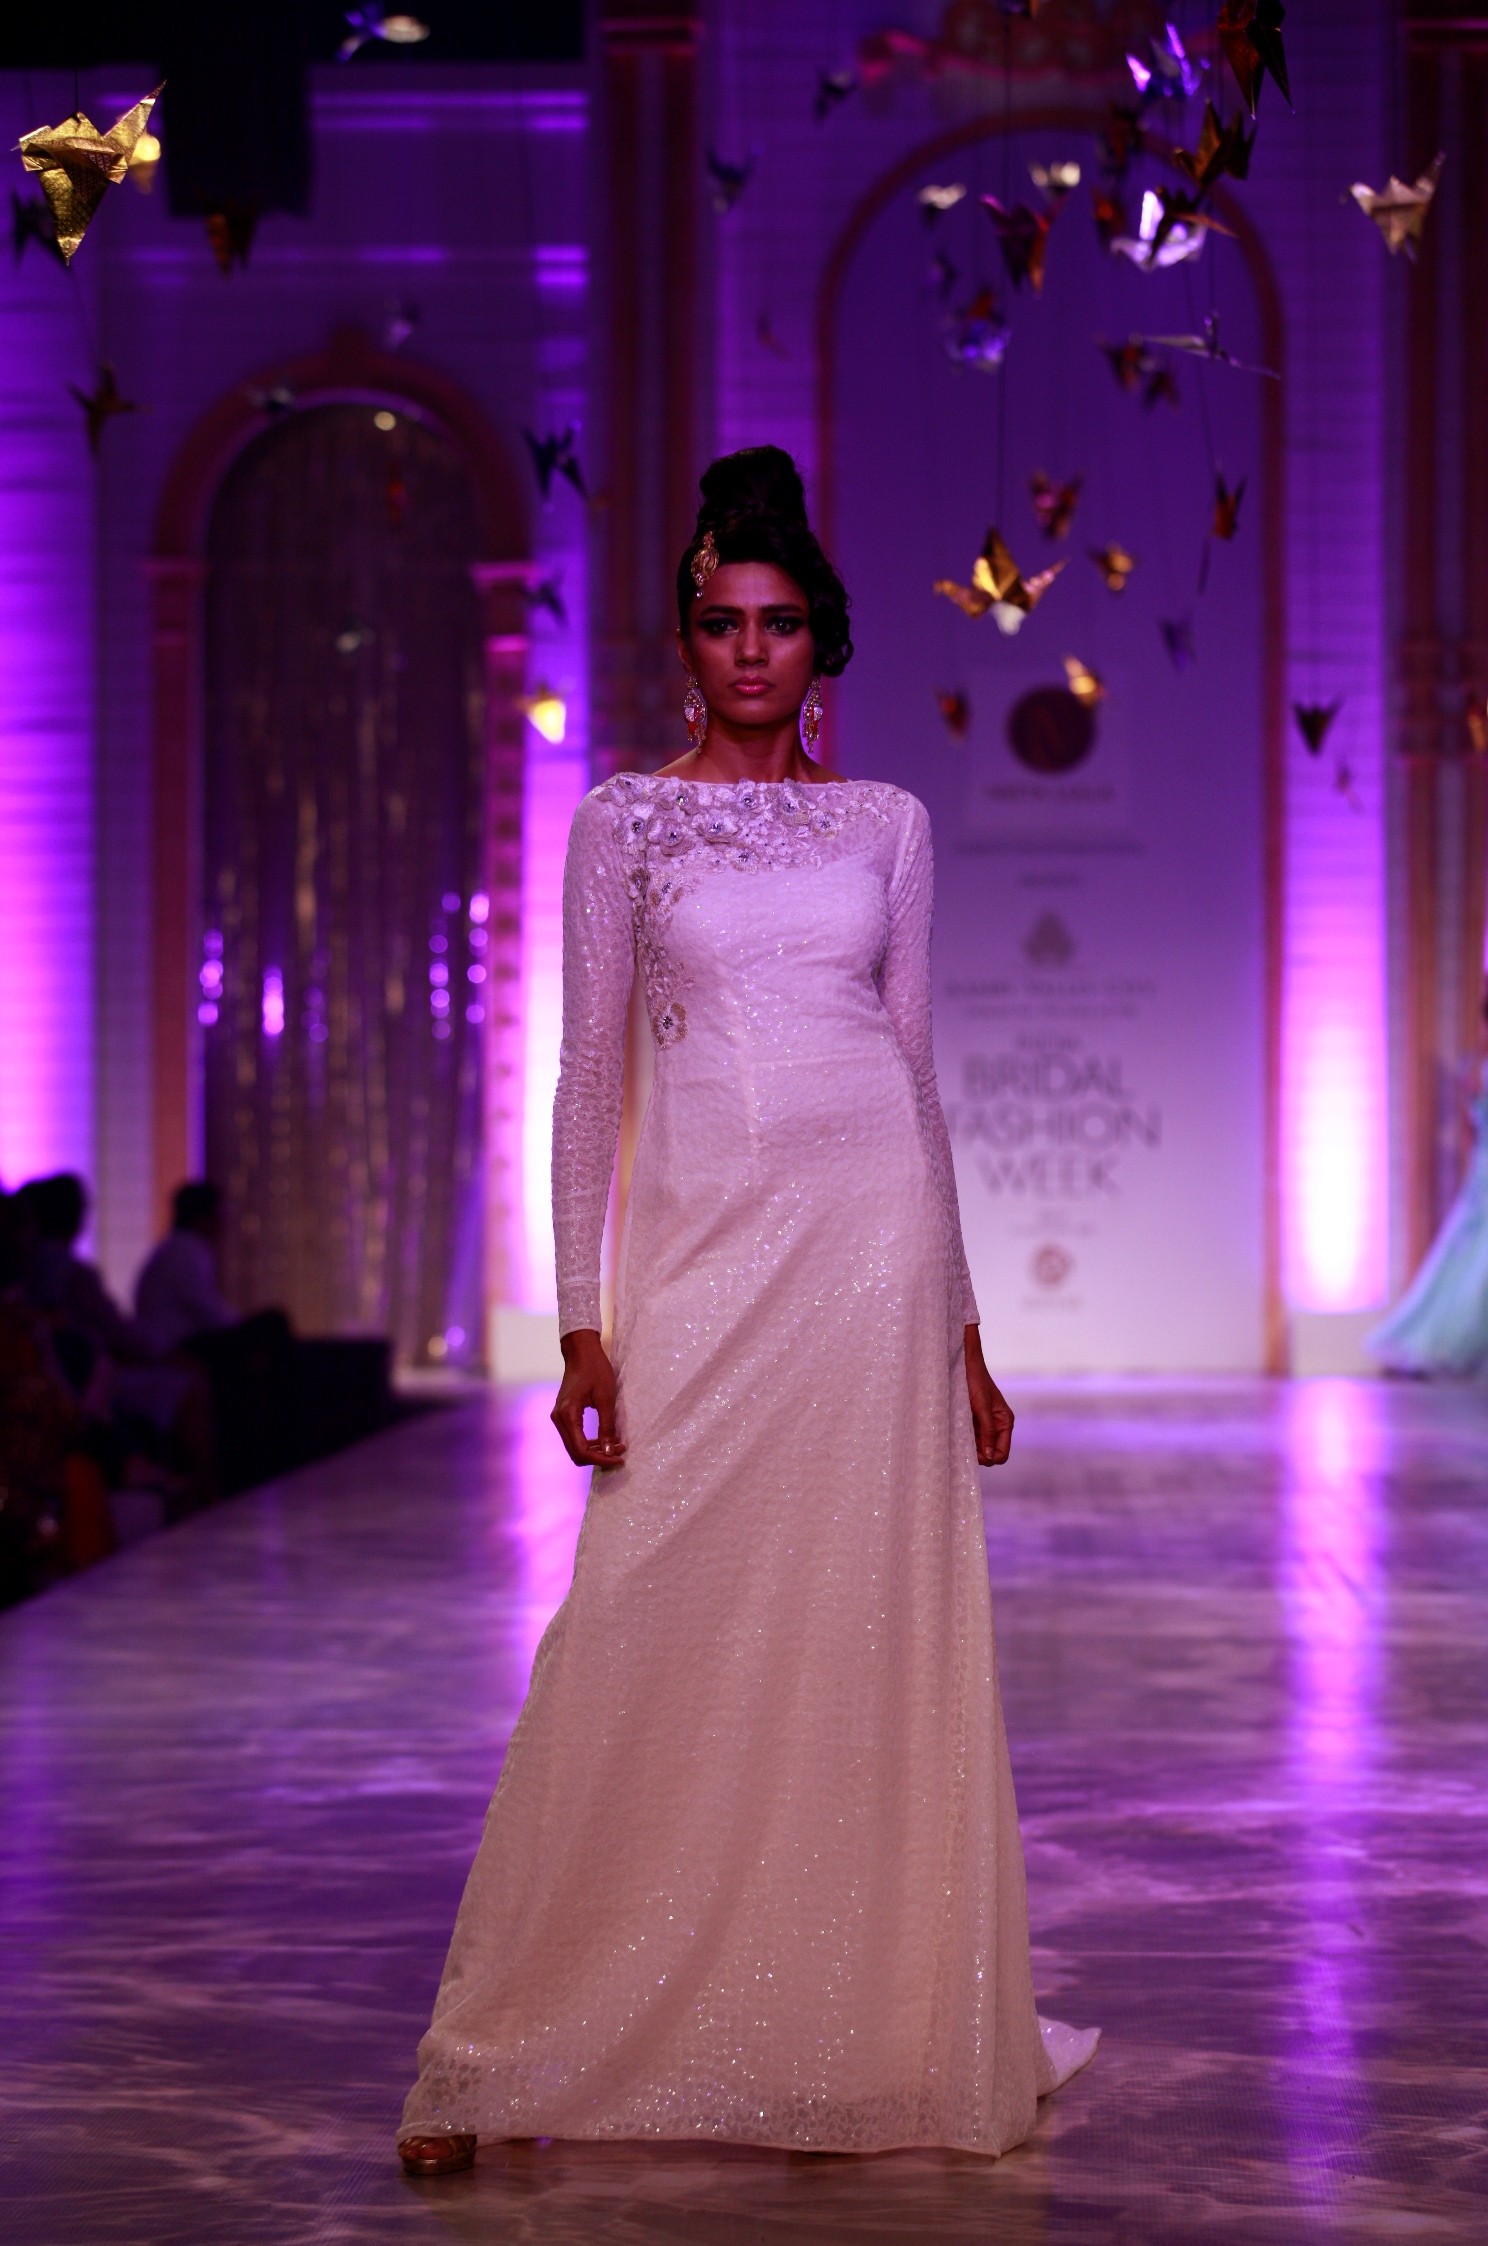 Seen at Aamby Valley India Bridal Fashion Week - Model walking for Neeta Lulla (3)